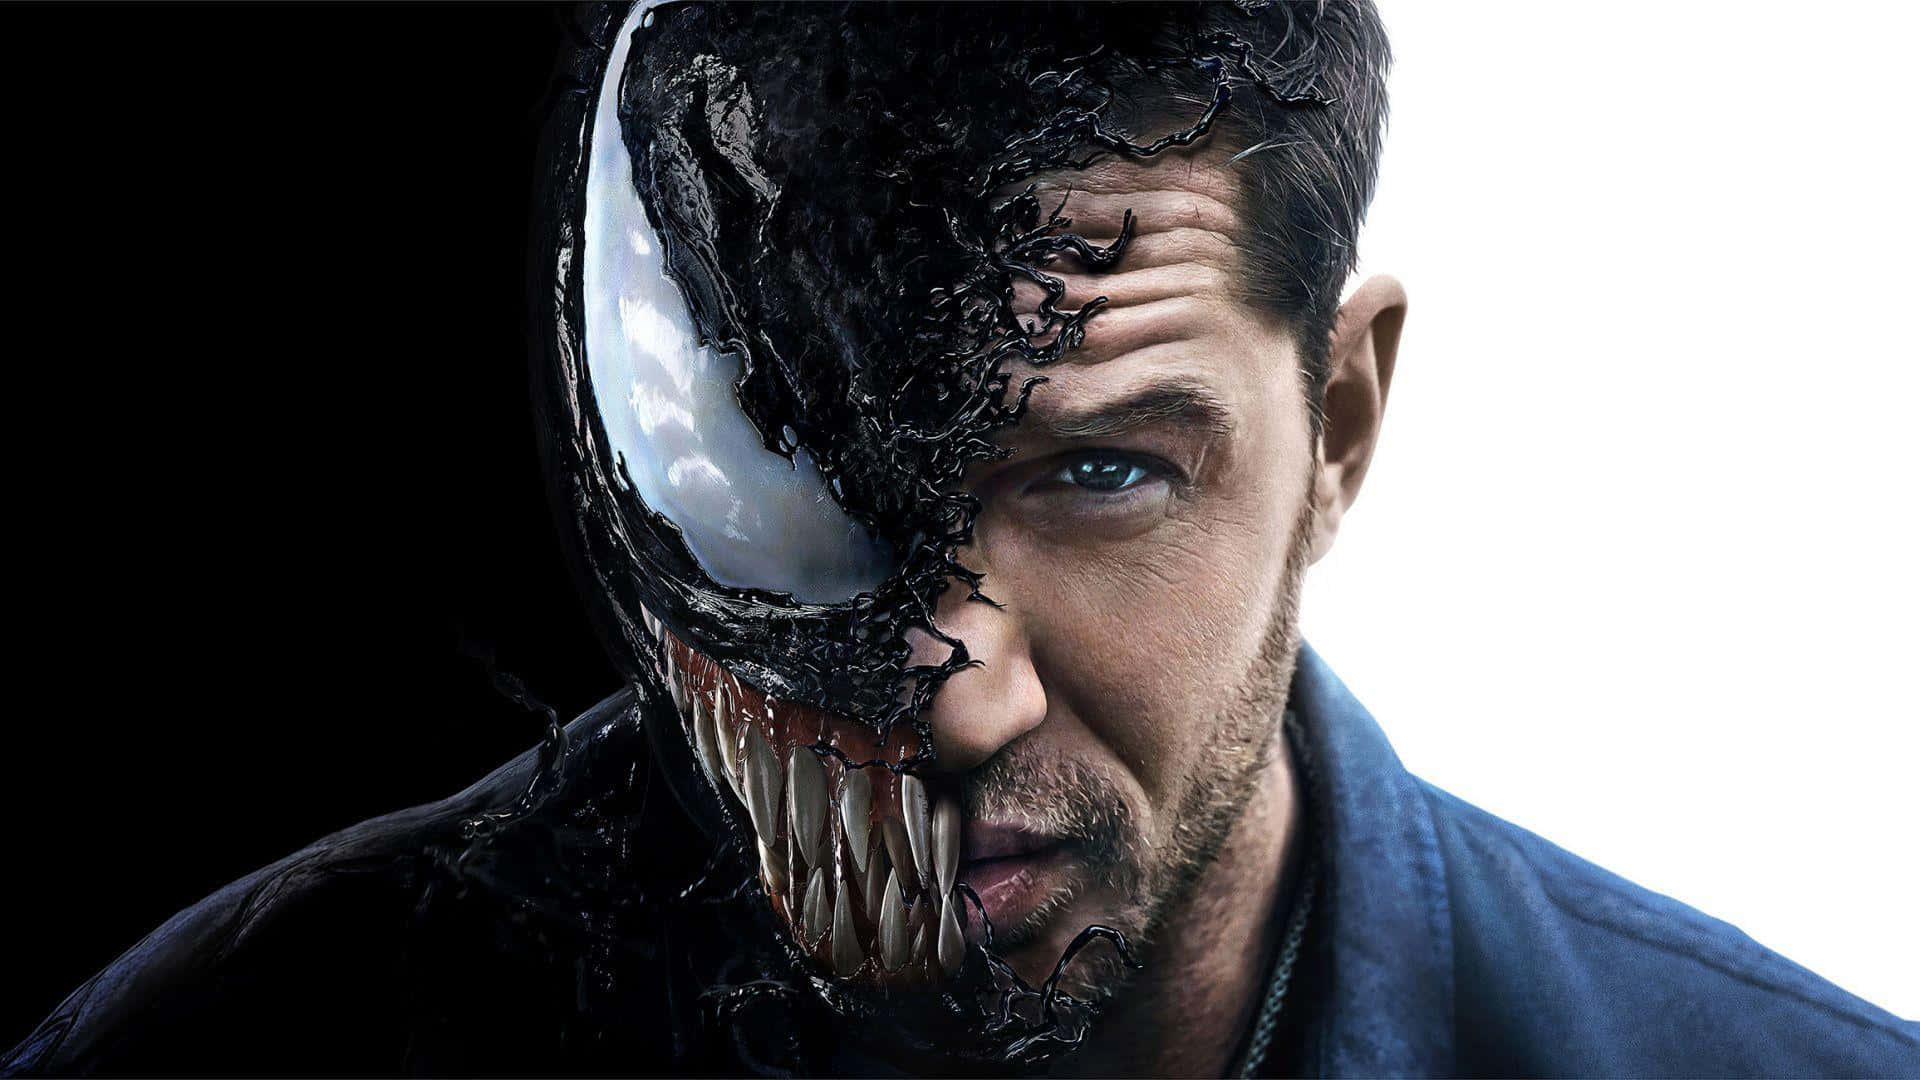 Tom Hardy as Venom in action Wallpaper